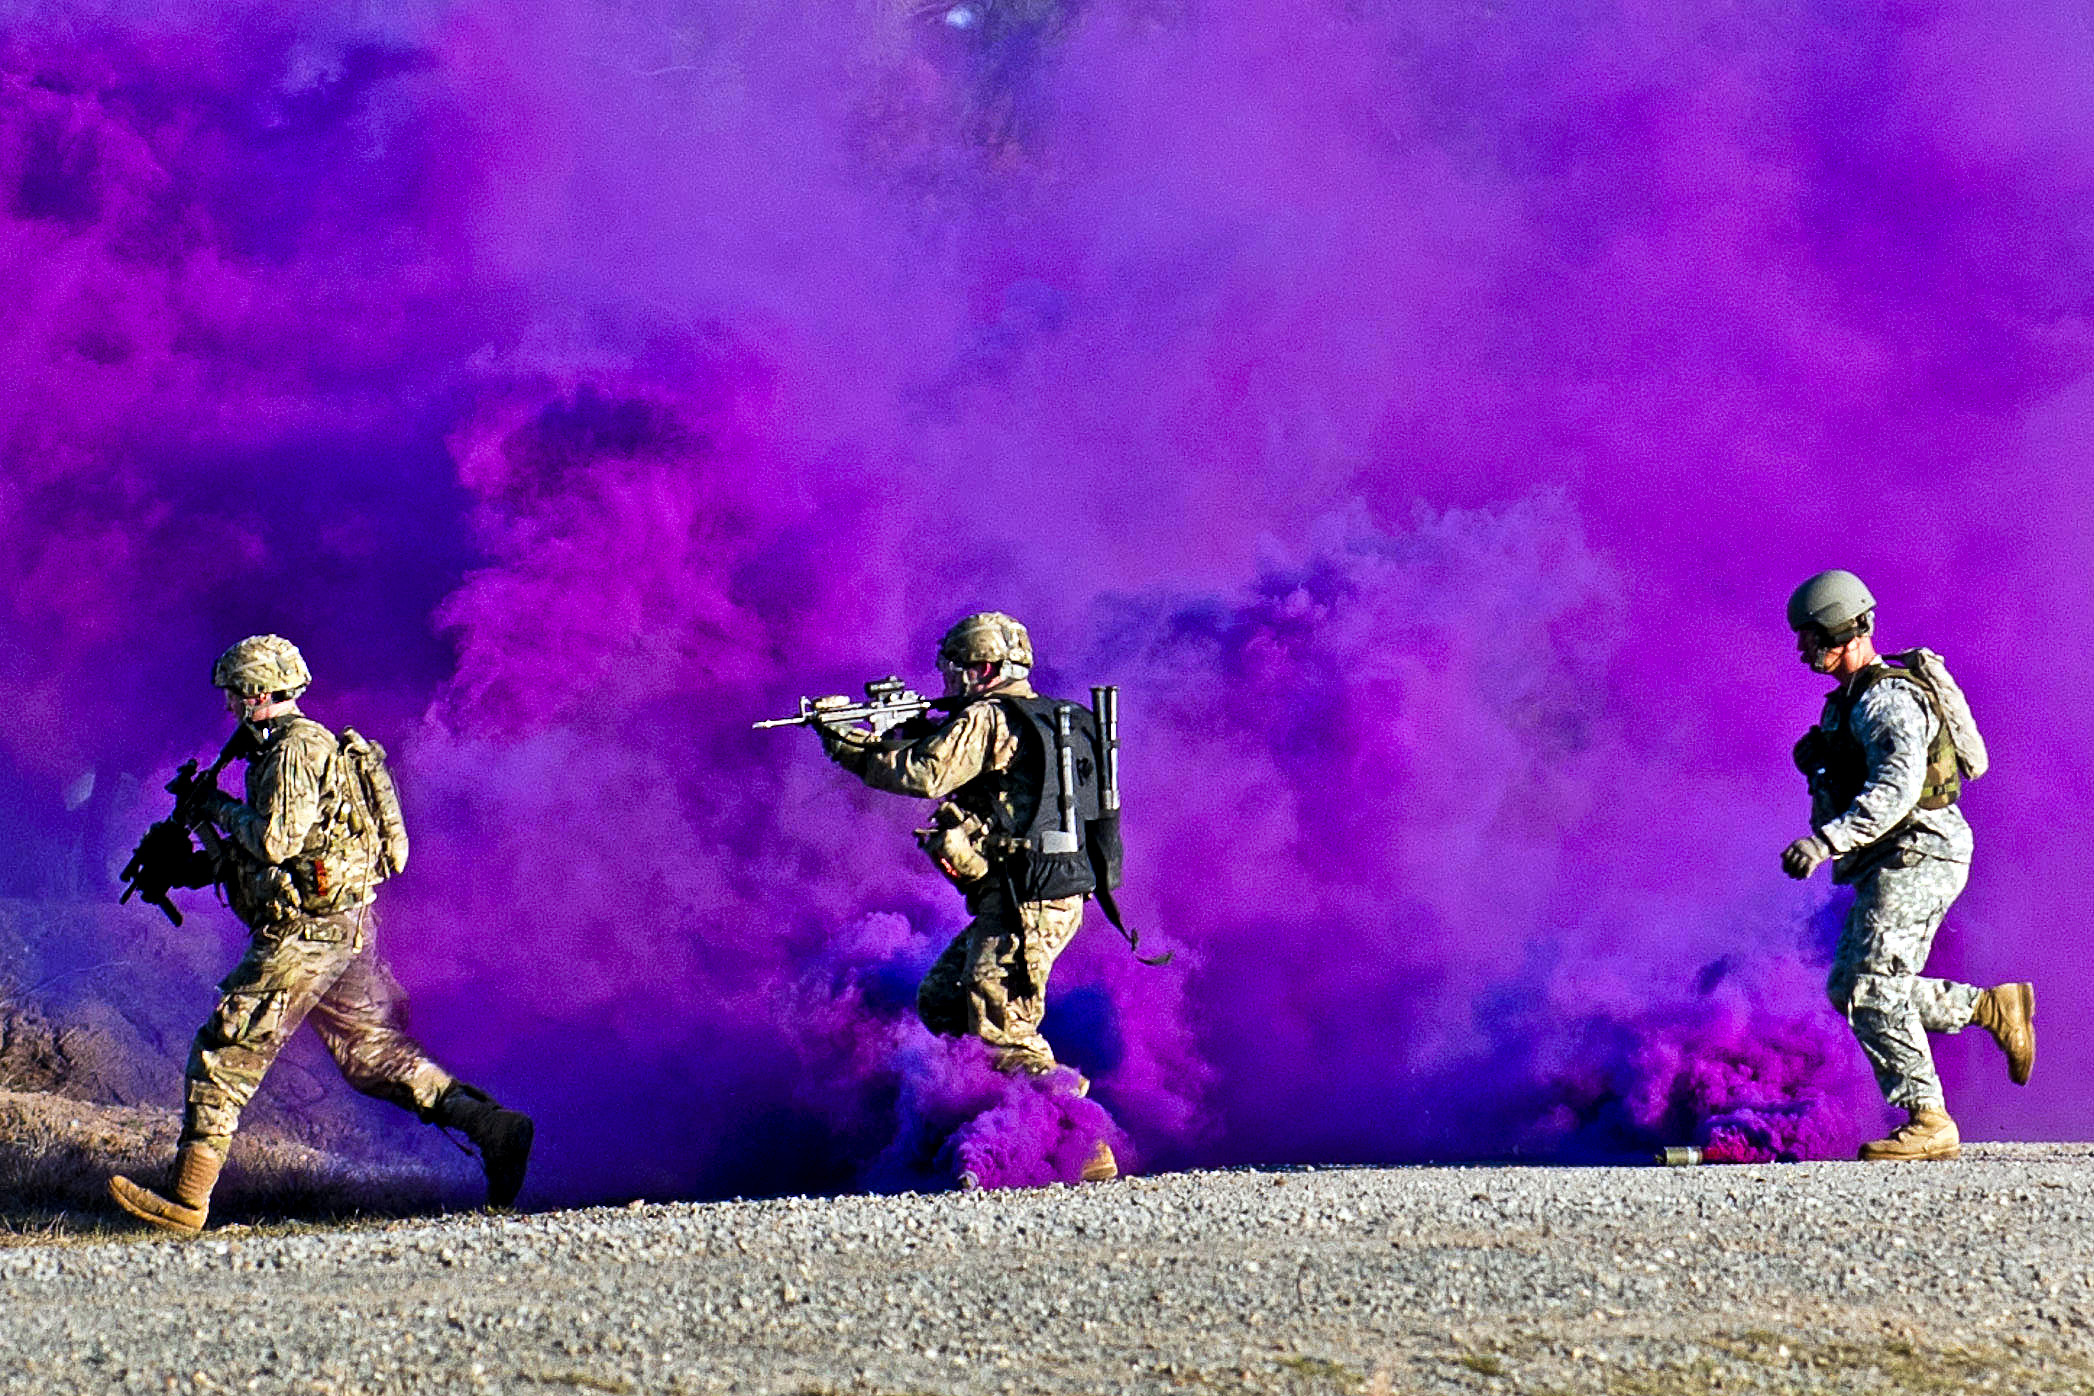 File:Flickr - The U.S. Army - Purple smoke.jpg - Wikimedia Commons